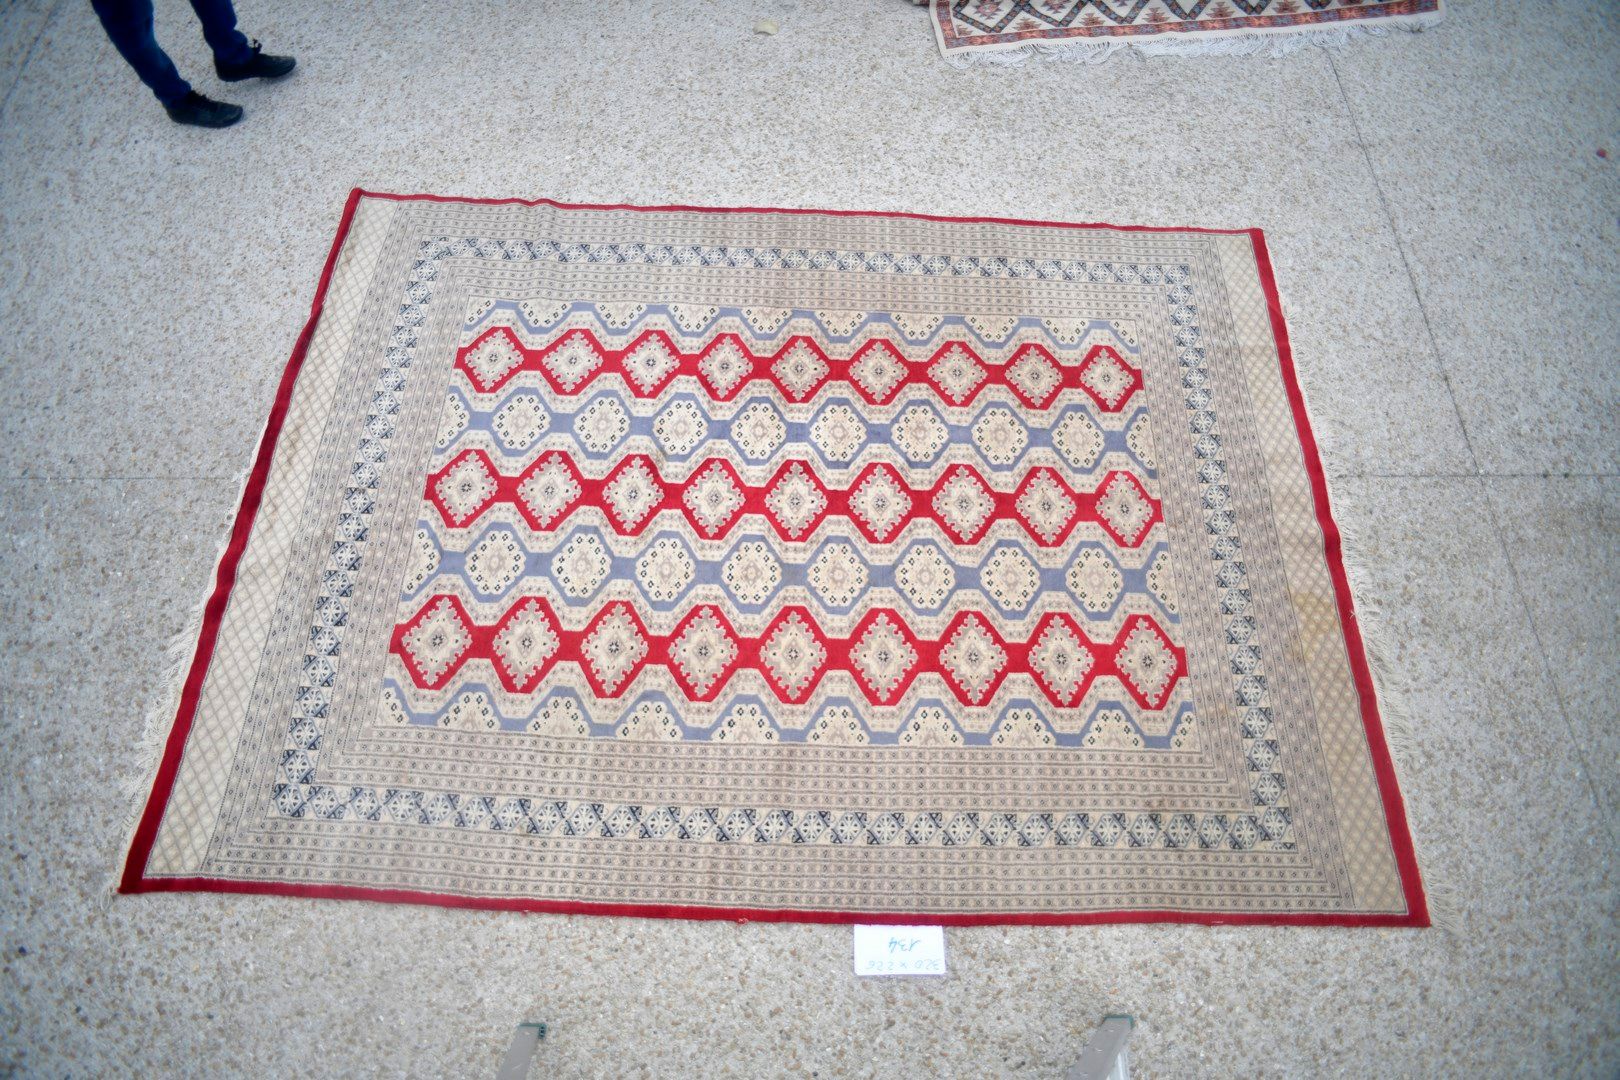 Null 穆尔塔内（巴基斯坦），约1980年。

羊毛天鹅绒，棉质基础。 

饰有蓝灰色和红宝石色造型的古汉。

状况良好。

320x226厘米